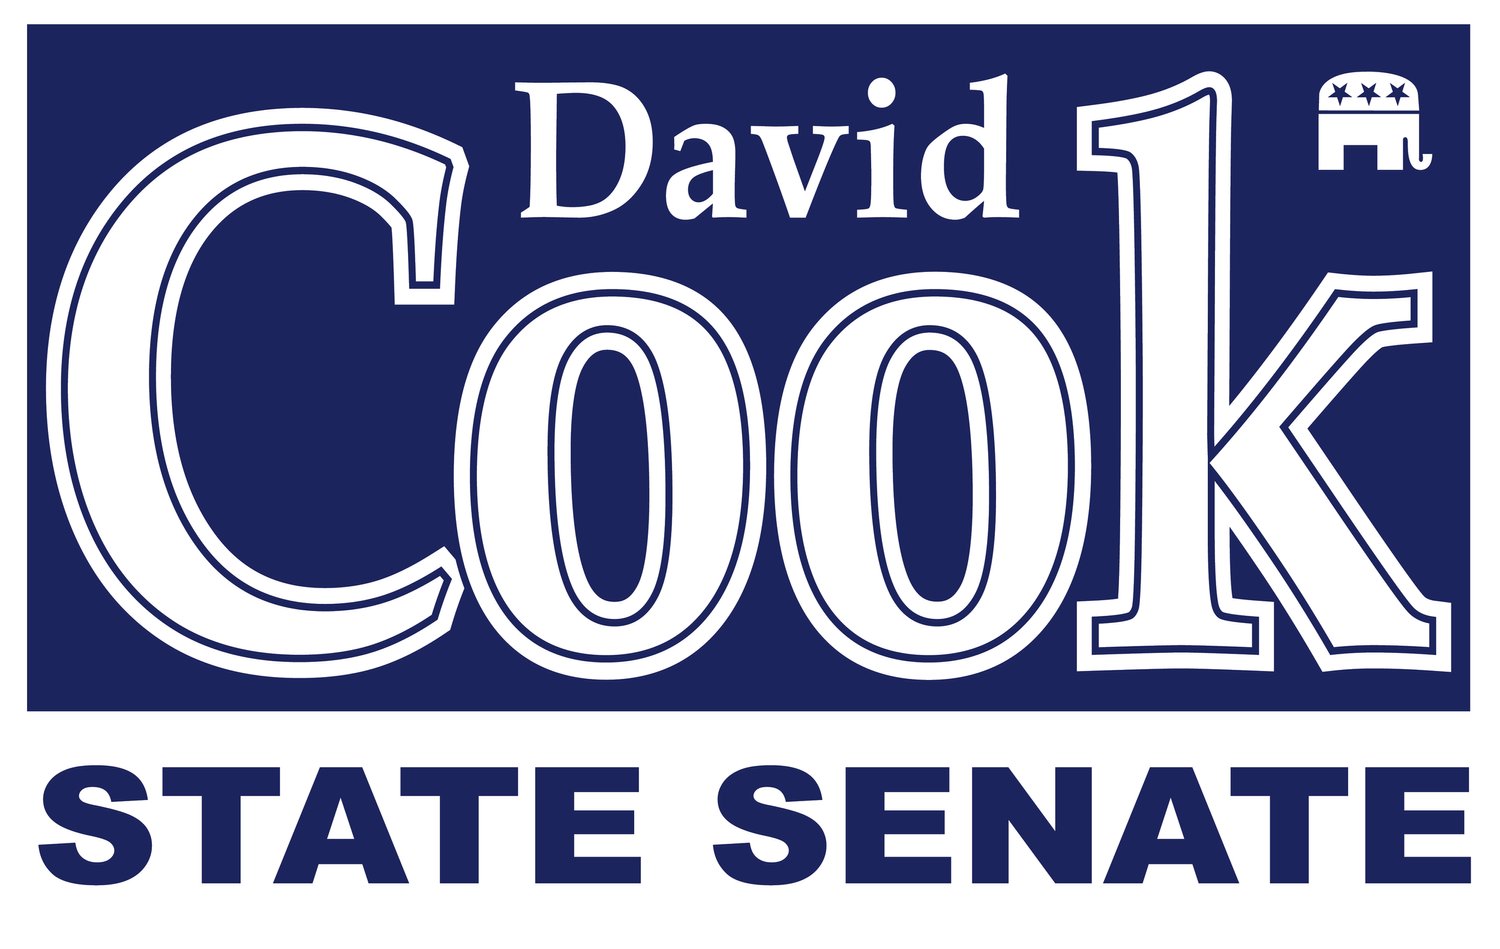 David Cook for Arizona